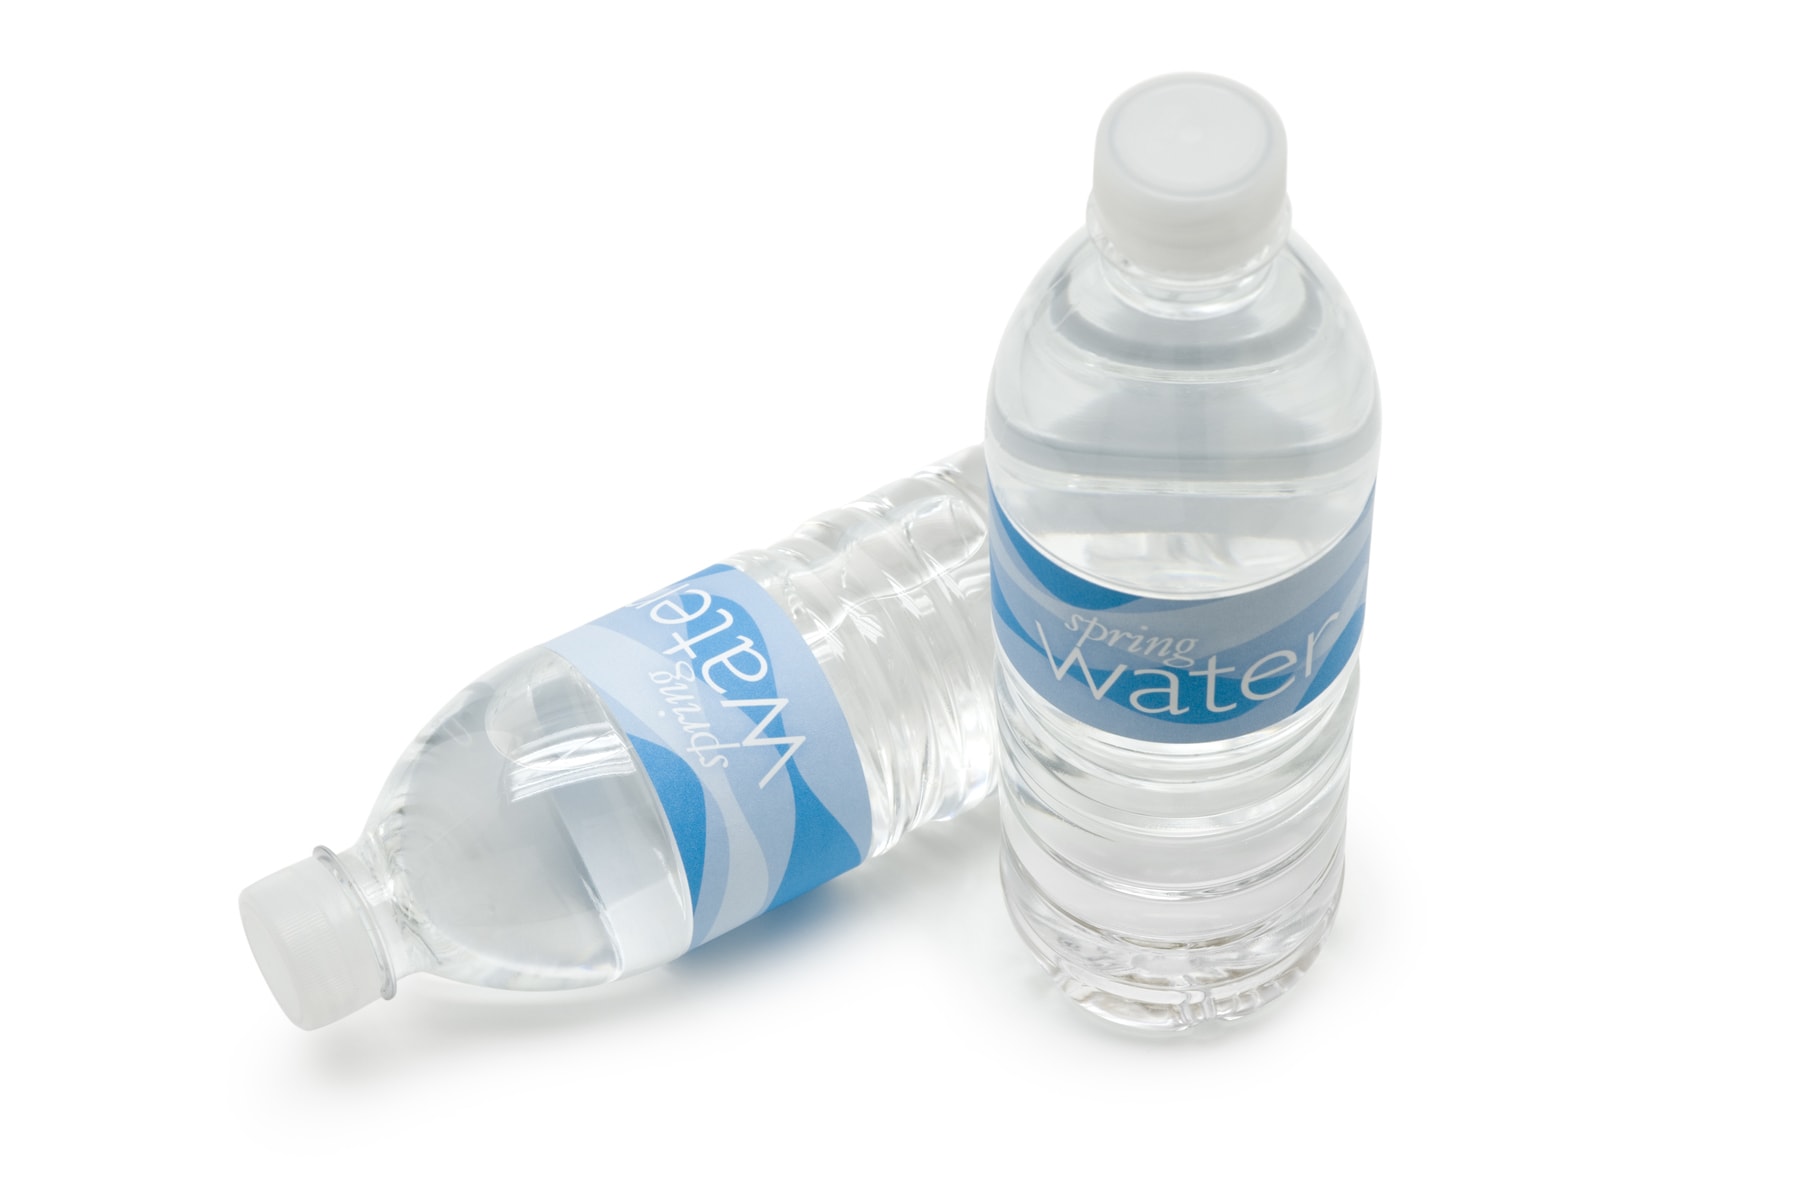 https://media.healthyfood.com/wp-content/uploads/2017/03/Ask-the-experts-Plastic-water-bottles.jpg